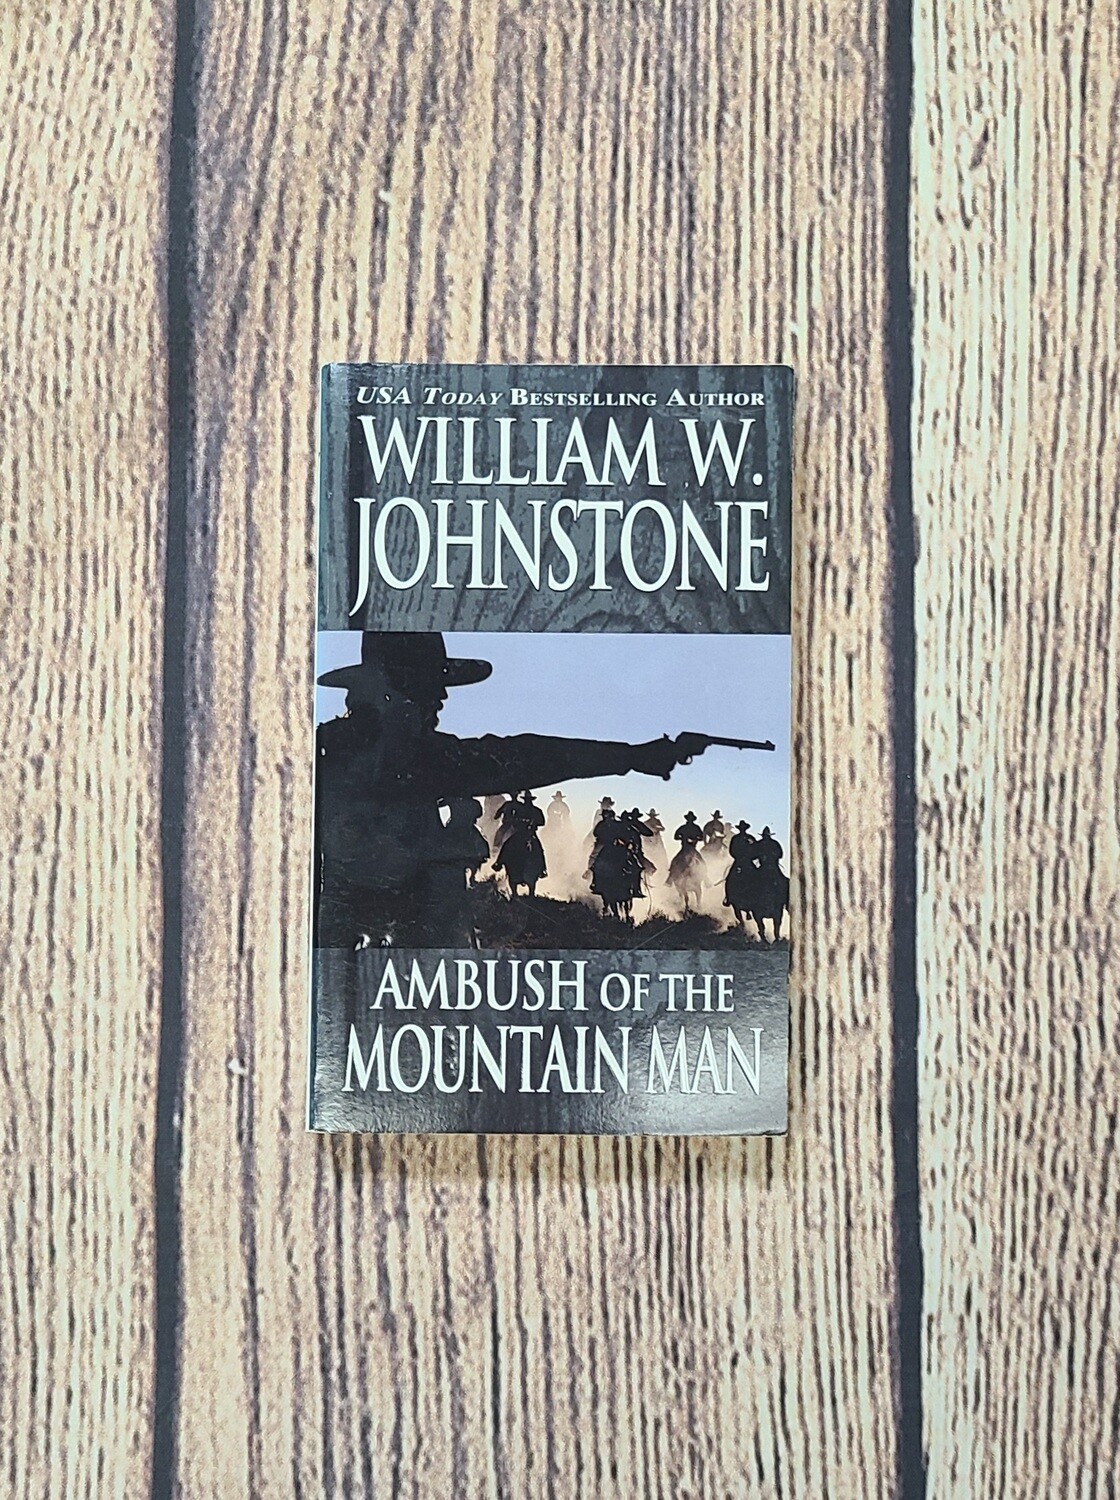 Ambush of the Mountain Man by William W. Johnstone